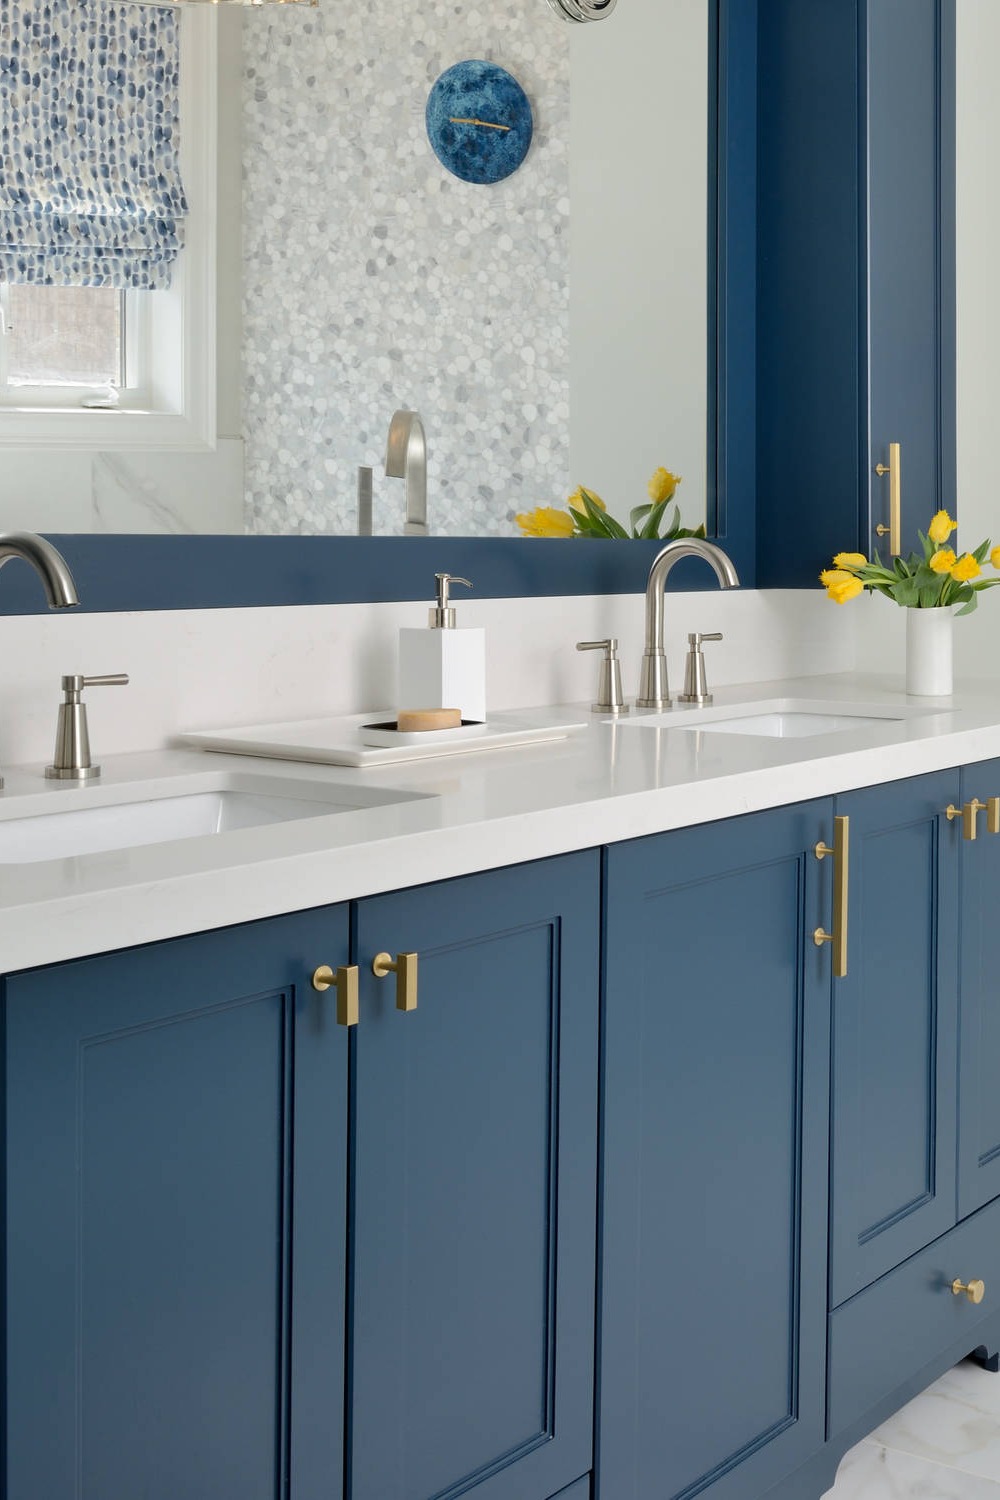 White Quartz Countertops Backsplash Recessed Panel Blue Cabinets Marble Tile Floor